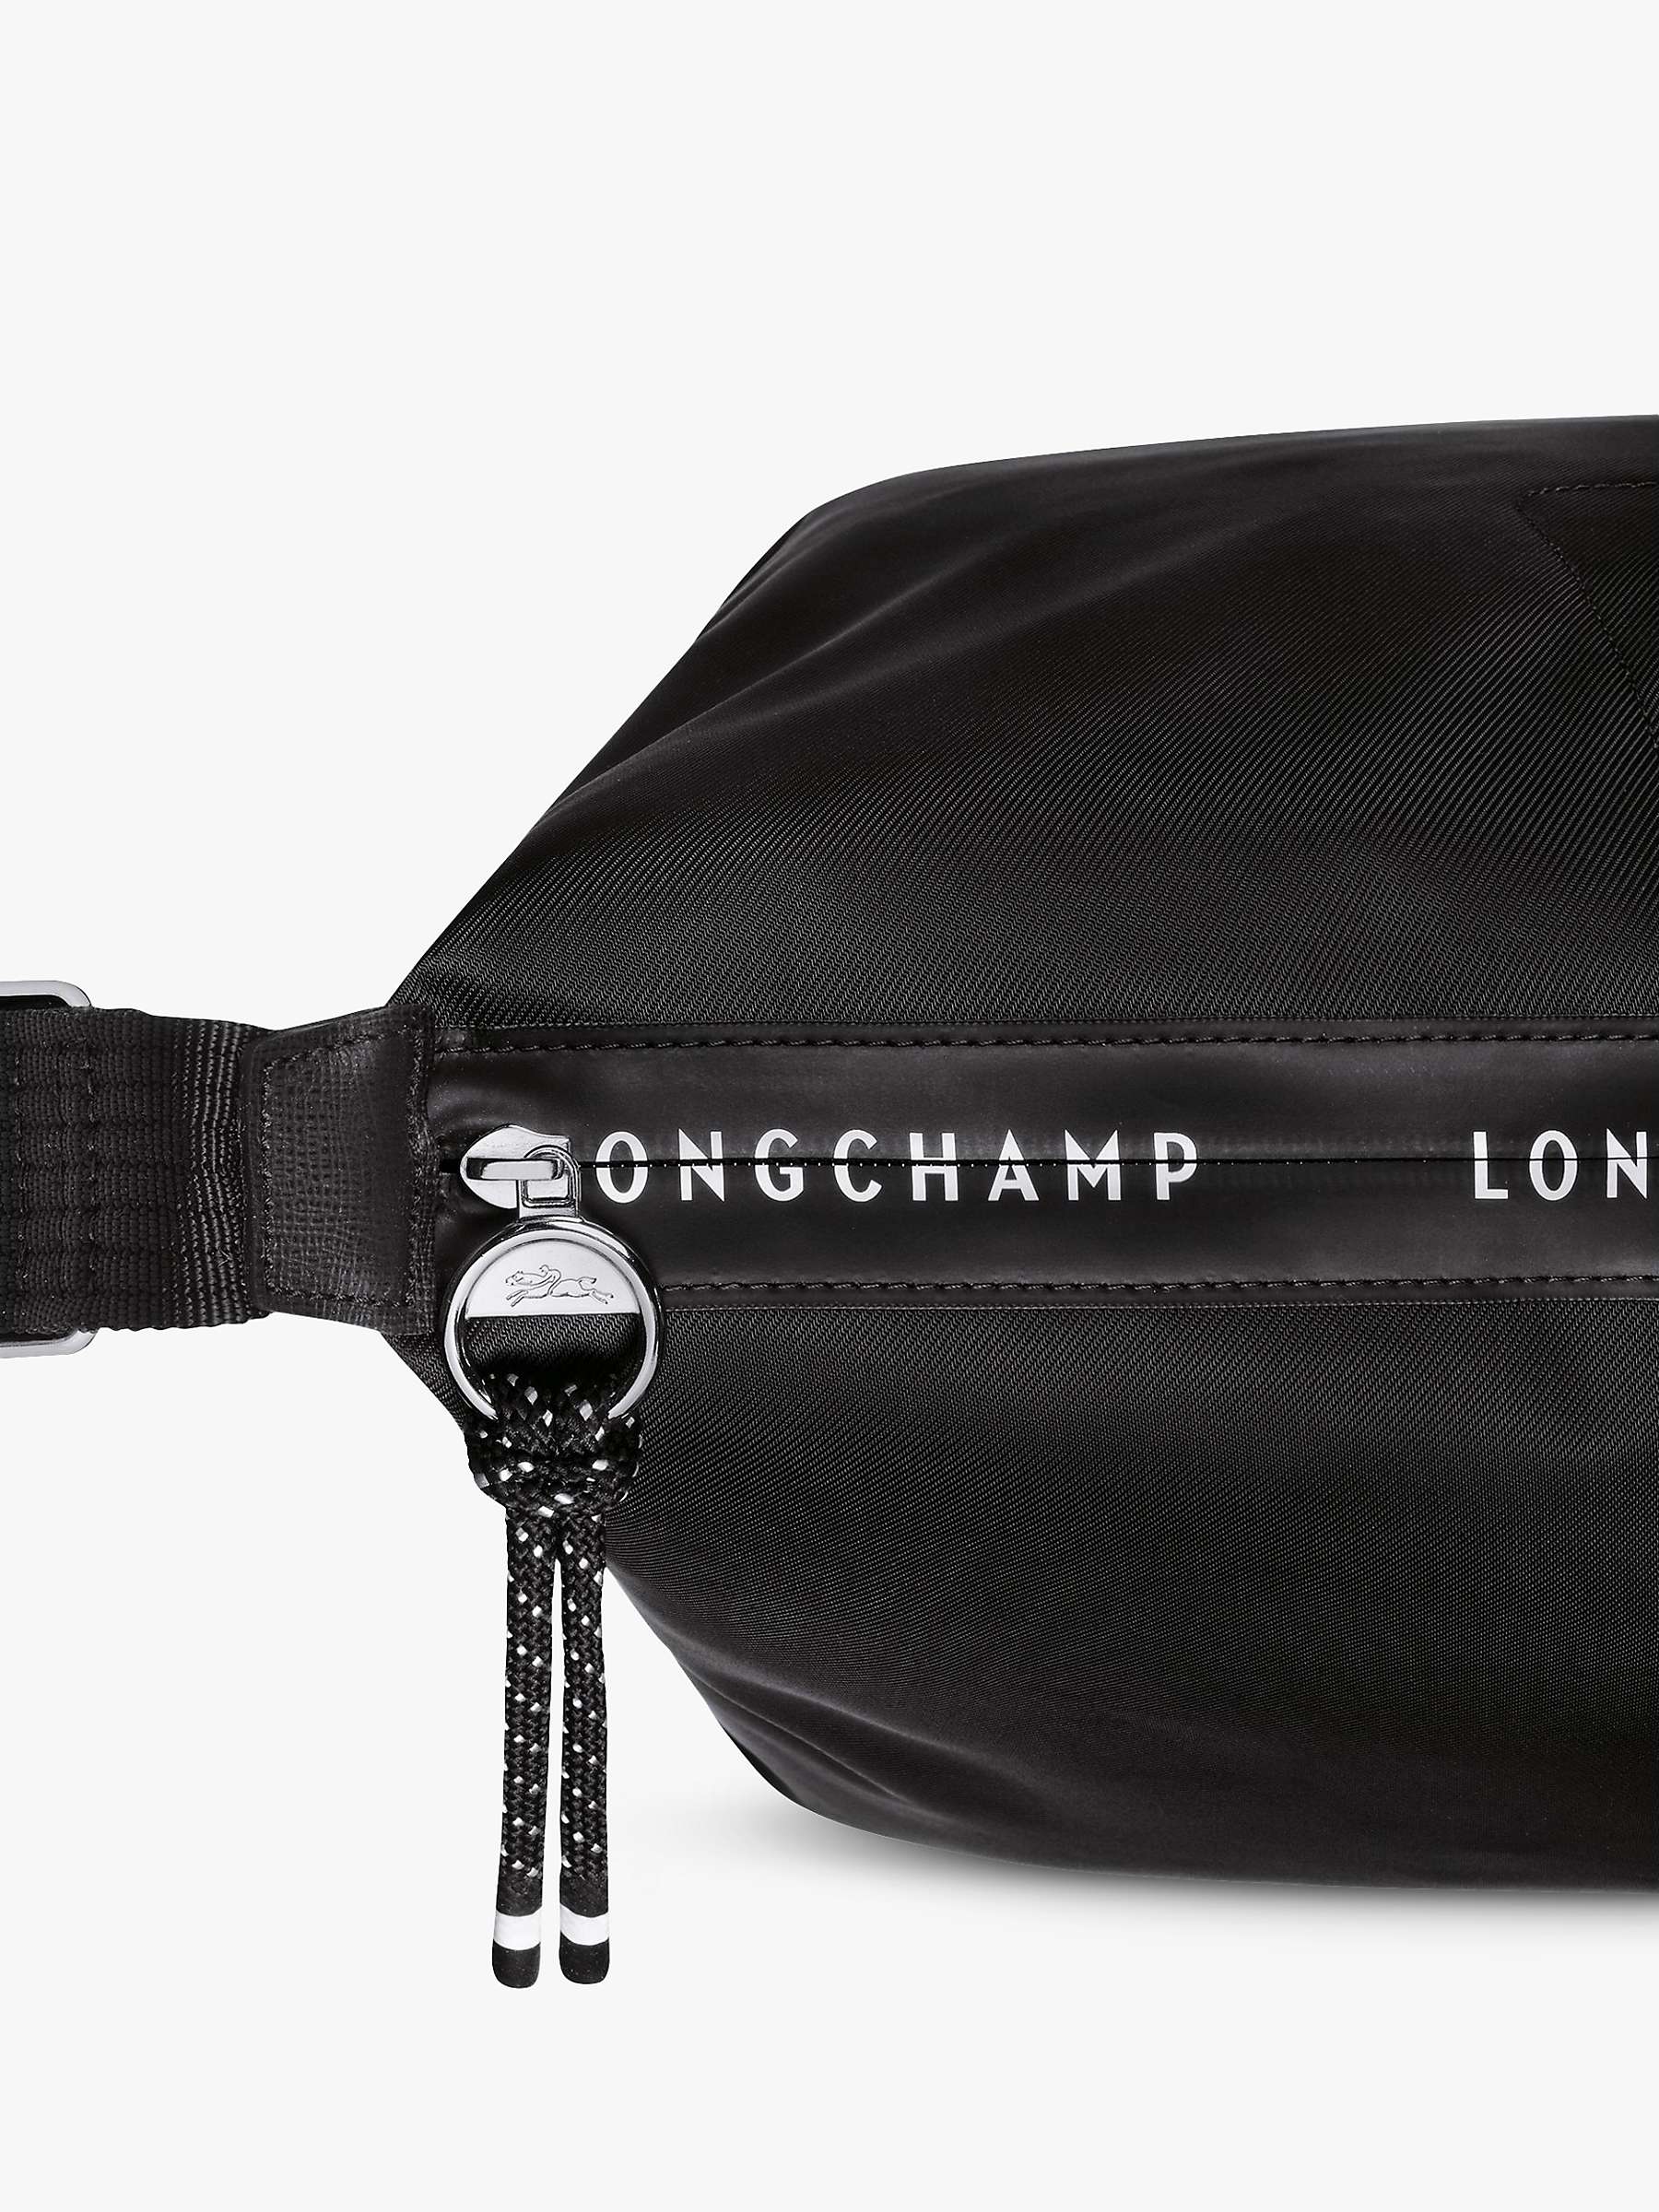 Buy Longchamp Le Pliage Energy Small Travel Bag Online at johnlewis.com